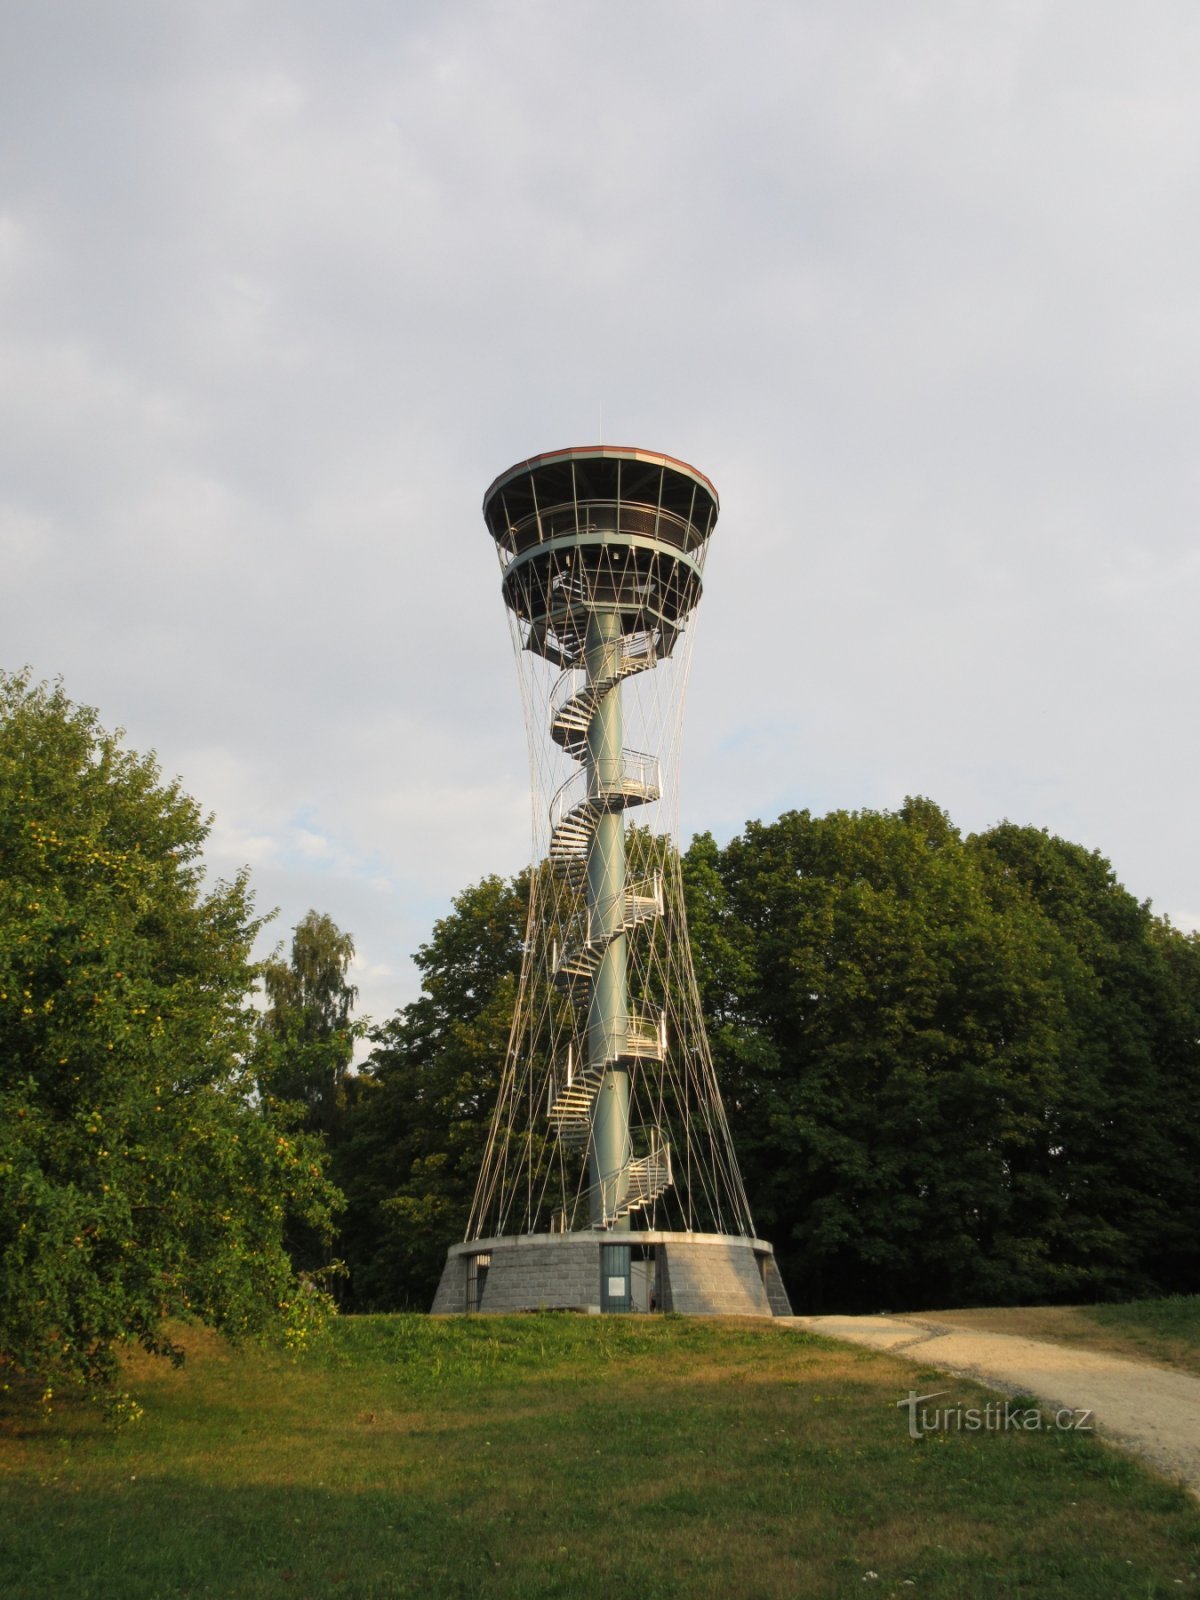 The Vysoké lookout tower near Tachova and the Na Vysoké monument